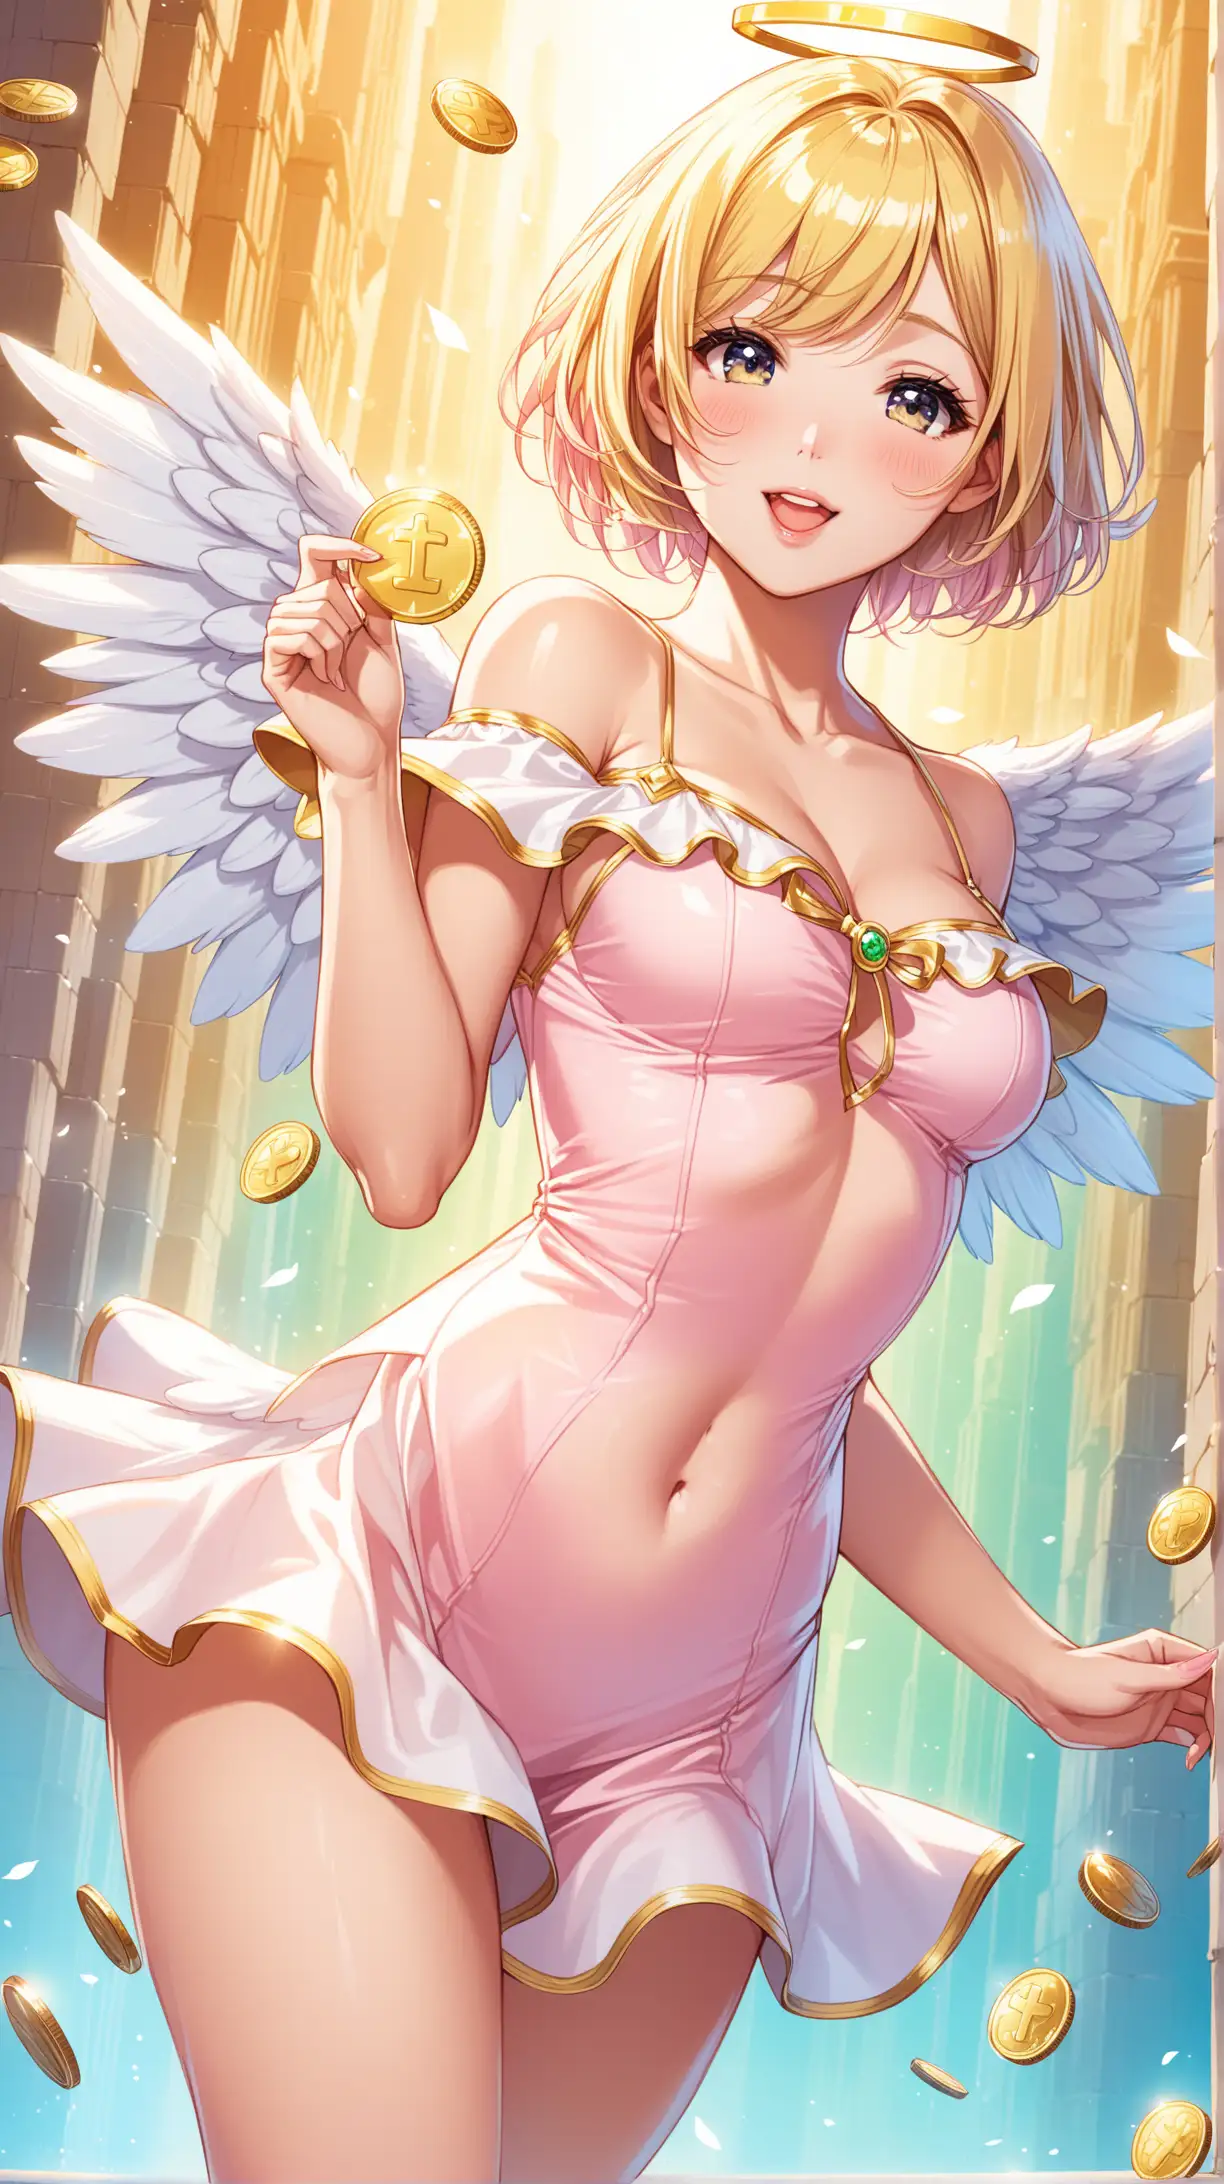 Sexy women carry coin , angel costume, playful, blond short hair, light pink short sexy dress, fantastic background .